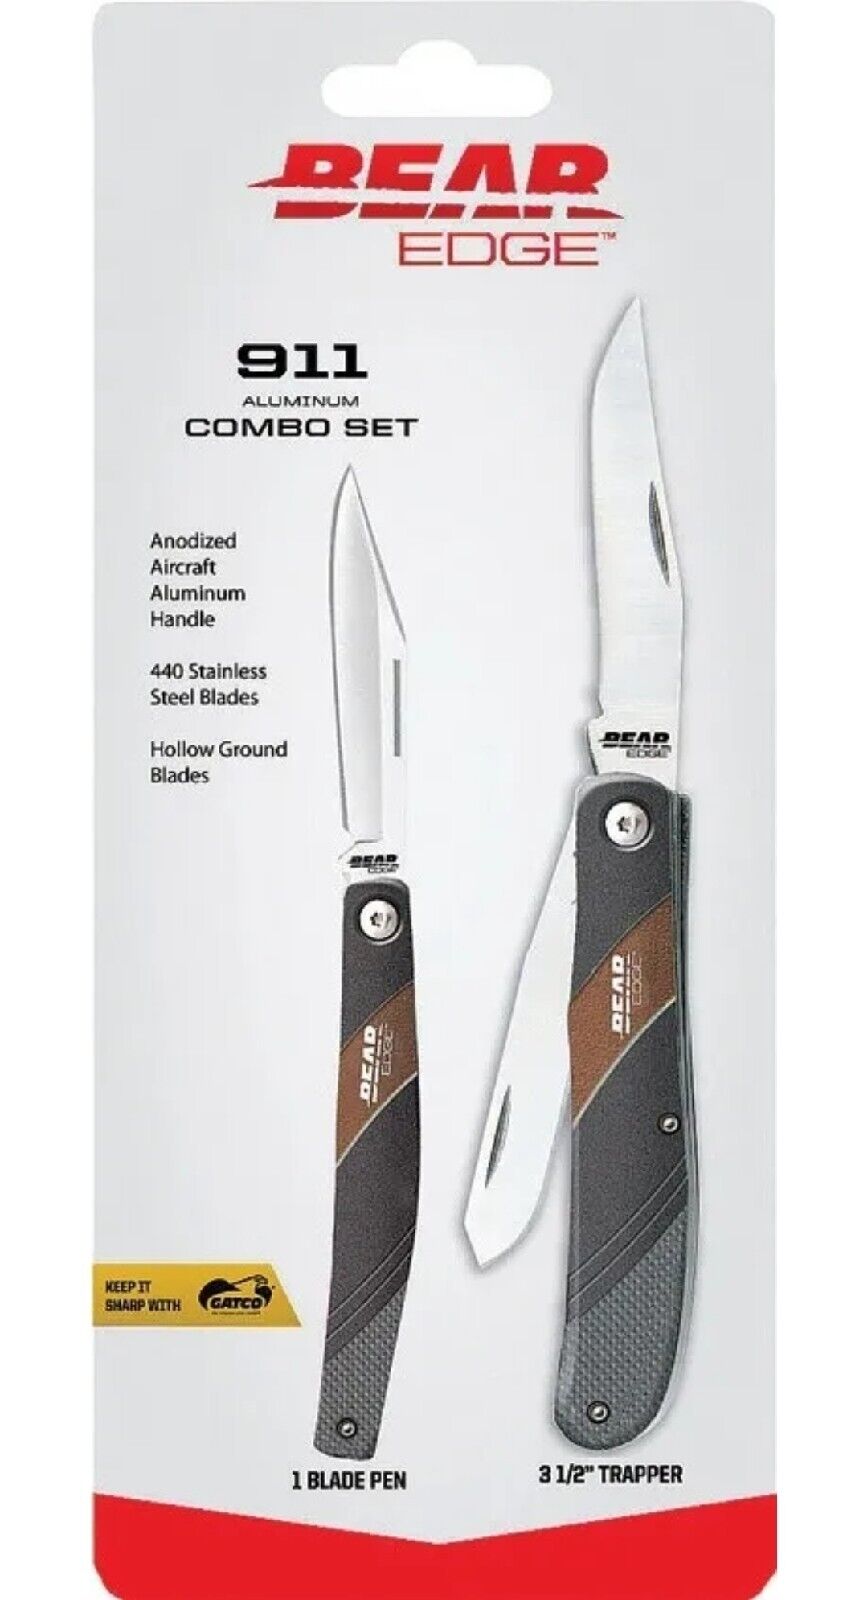 Bear Edge 911 2pc Black/Red Aluminum Folding 440 Stainless Knife Combo Set 